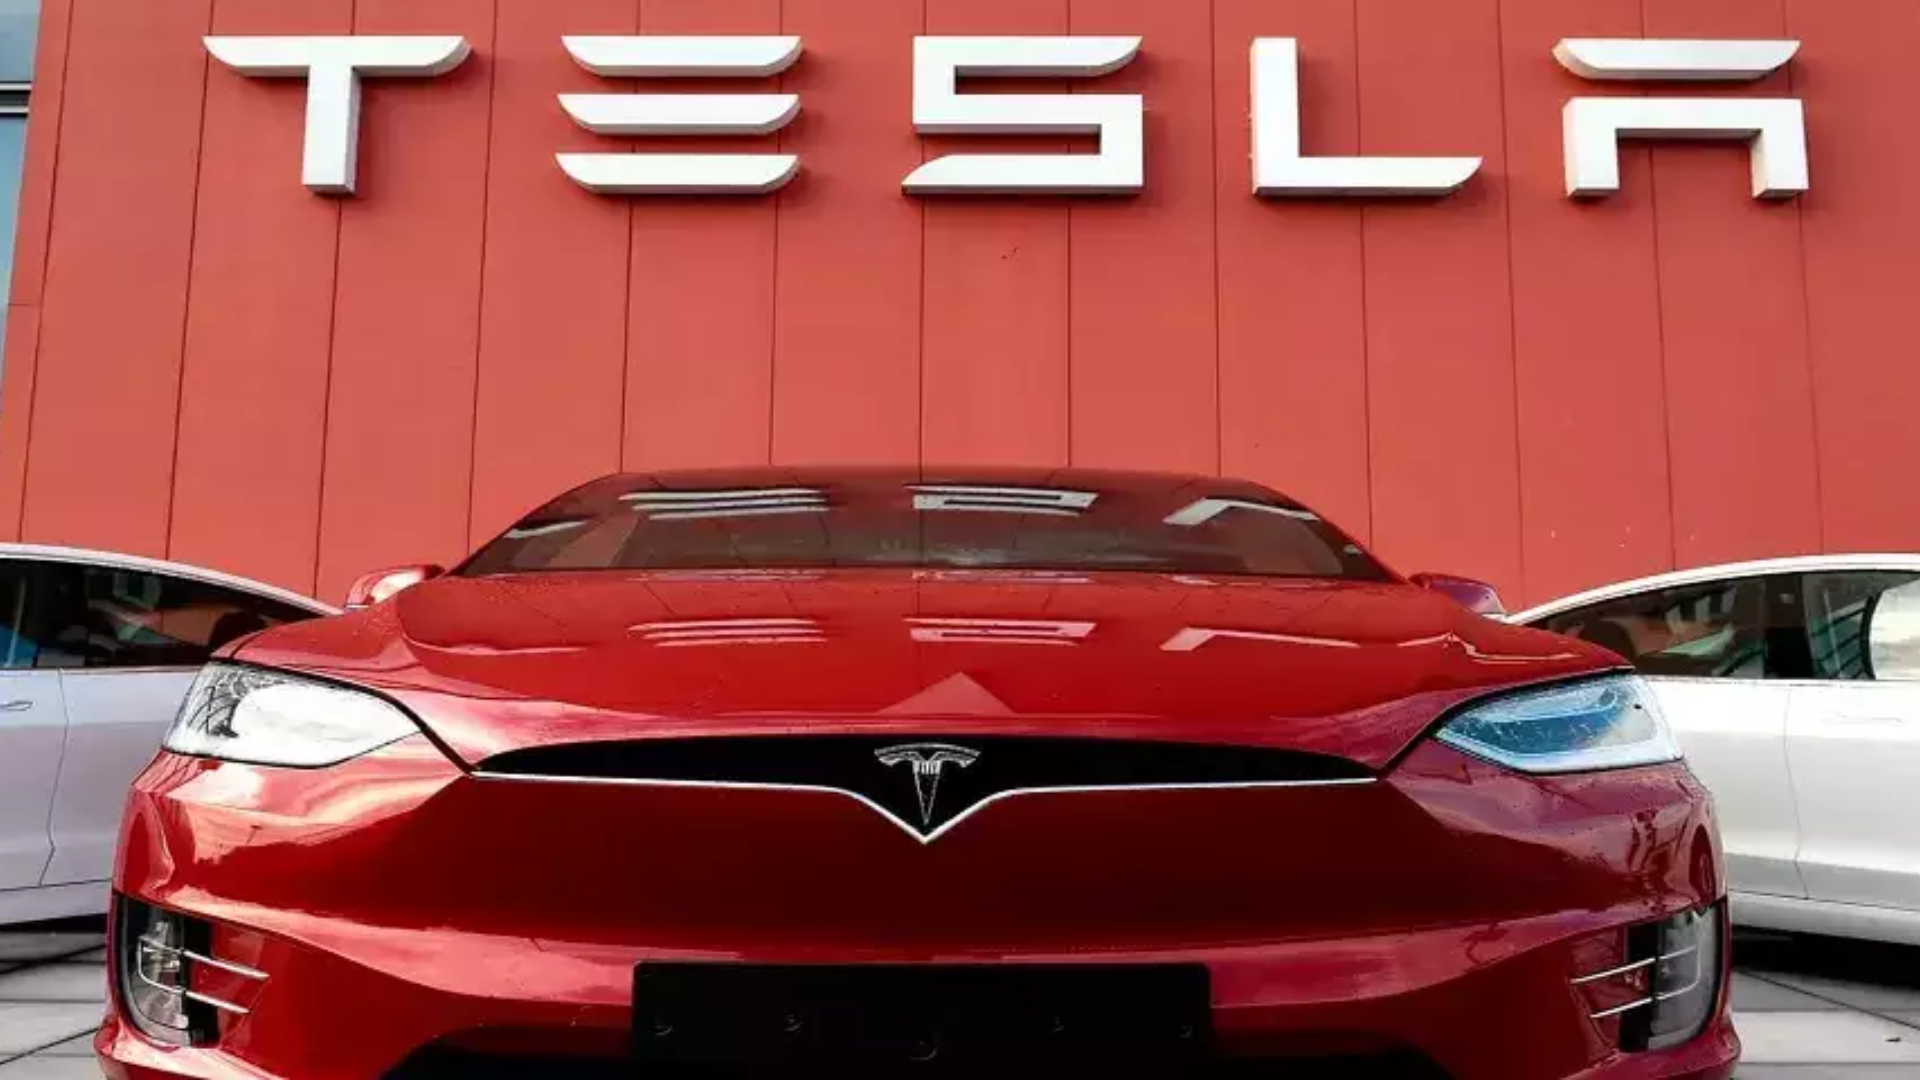 Tesla’s Roadmap to Achieve $3.6 Billion Revenue from EV Sales in India by 2030